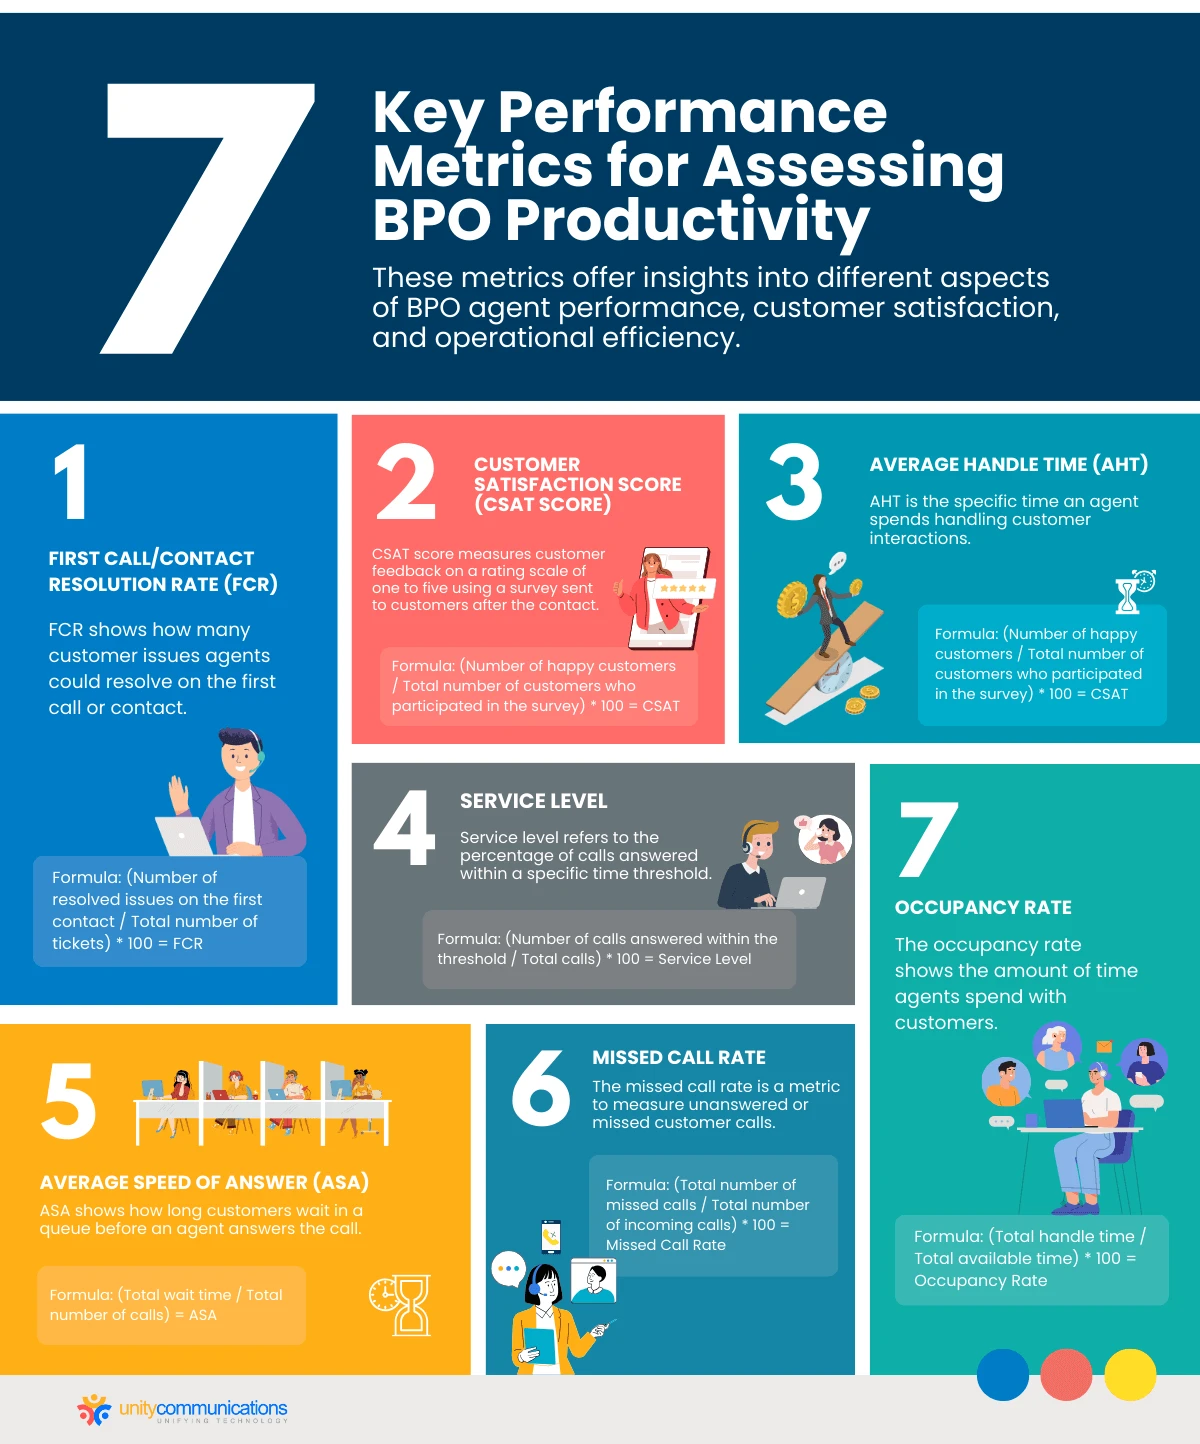  Key Performance Metrics for Assessing BPO Productivity